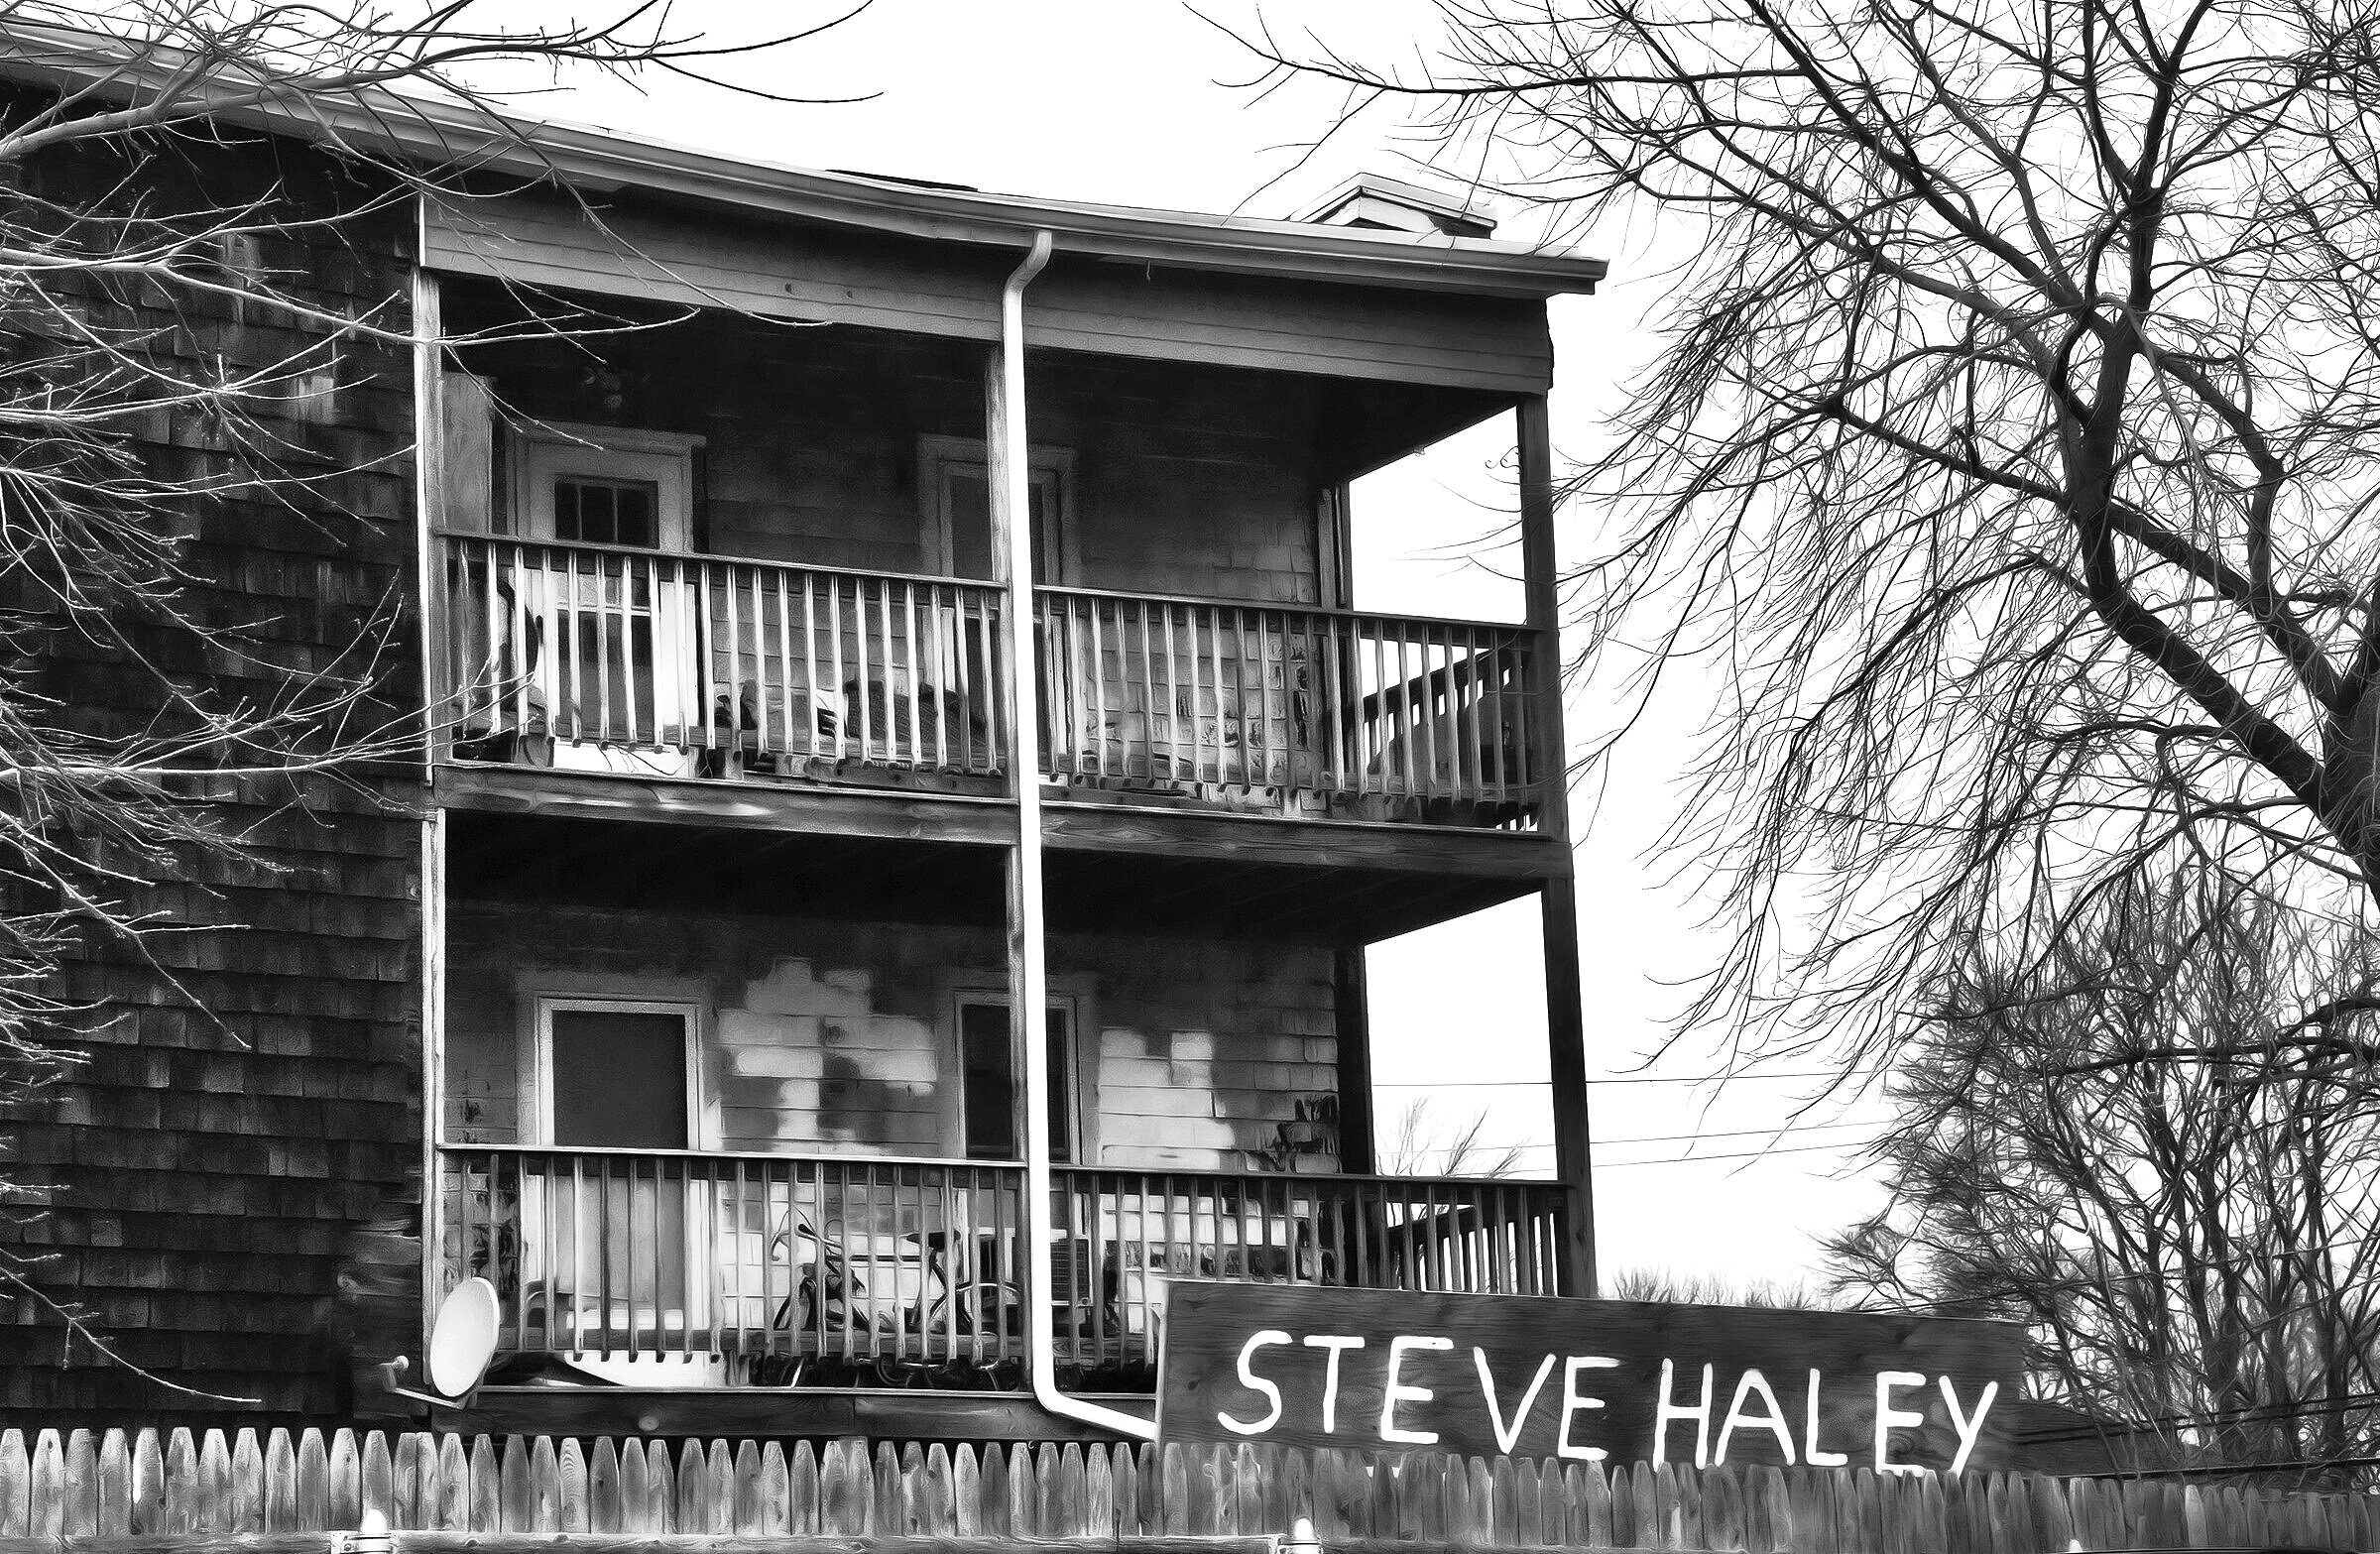 Steve Haley Lives Here